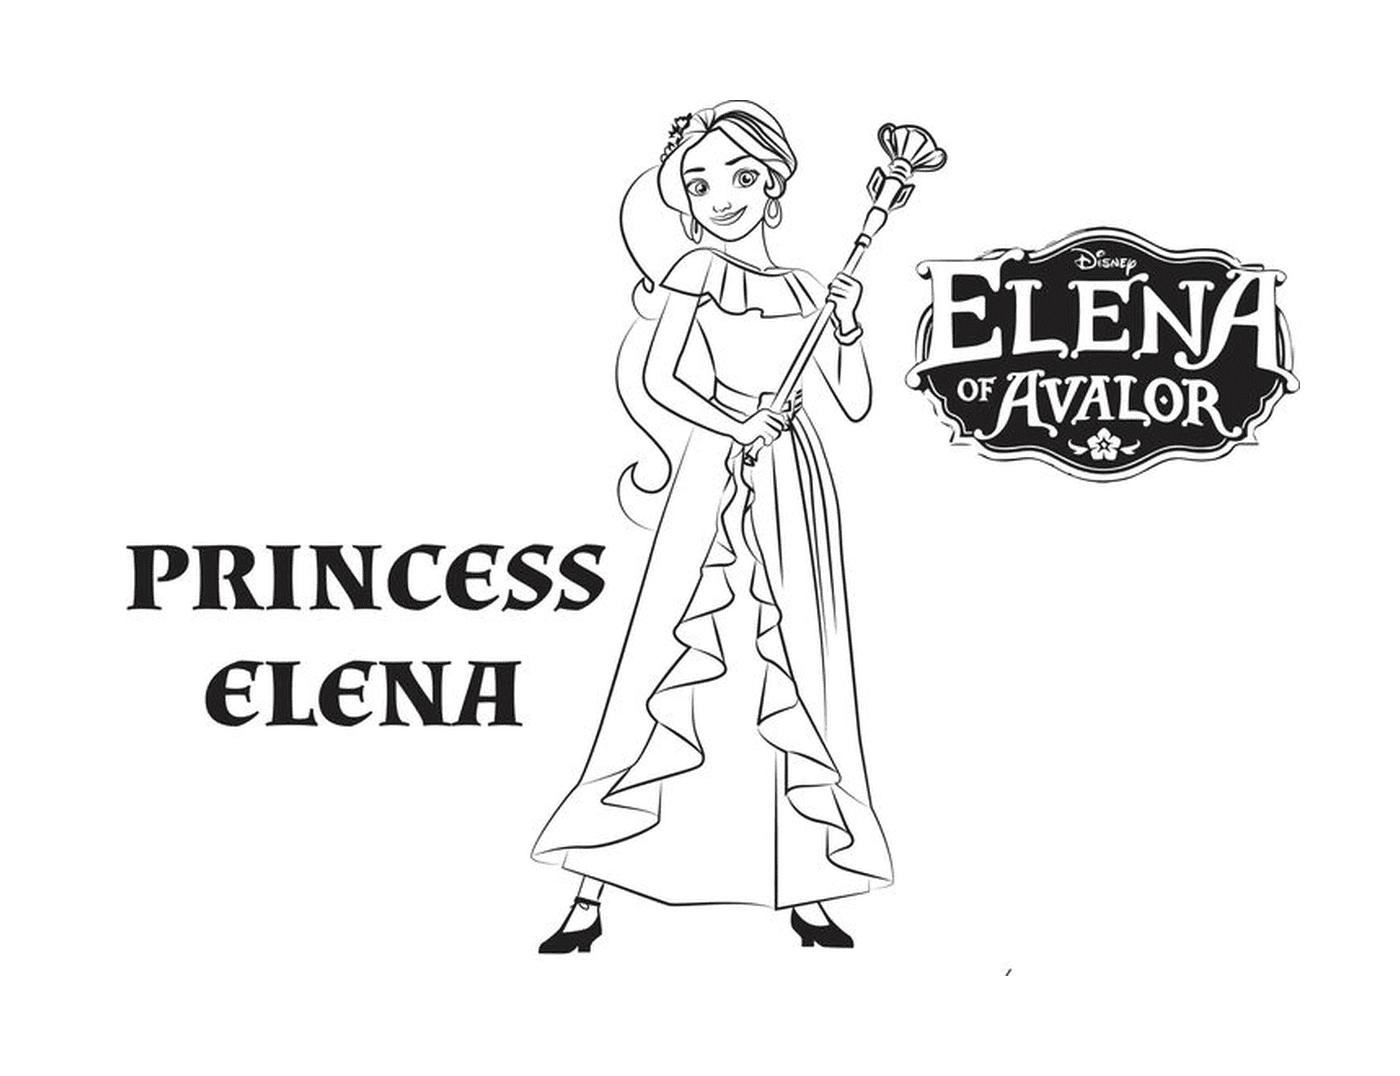  Prinzessin Elena von Disney Avalor 